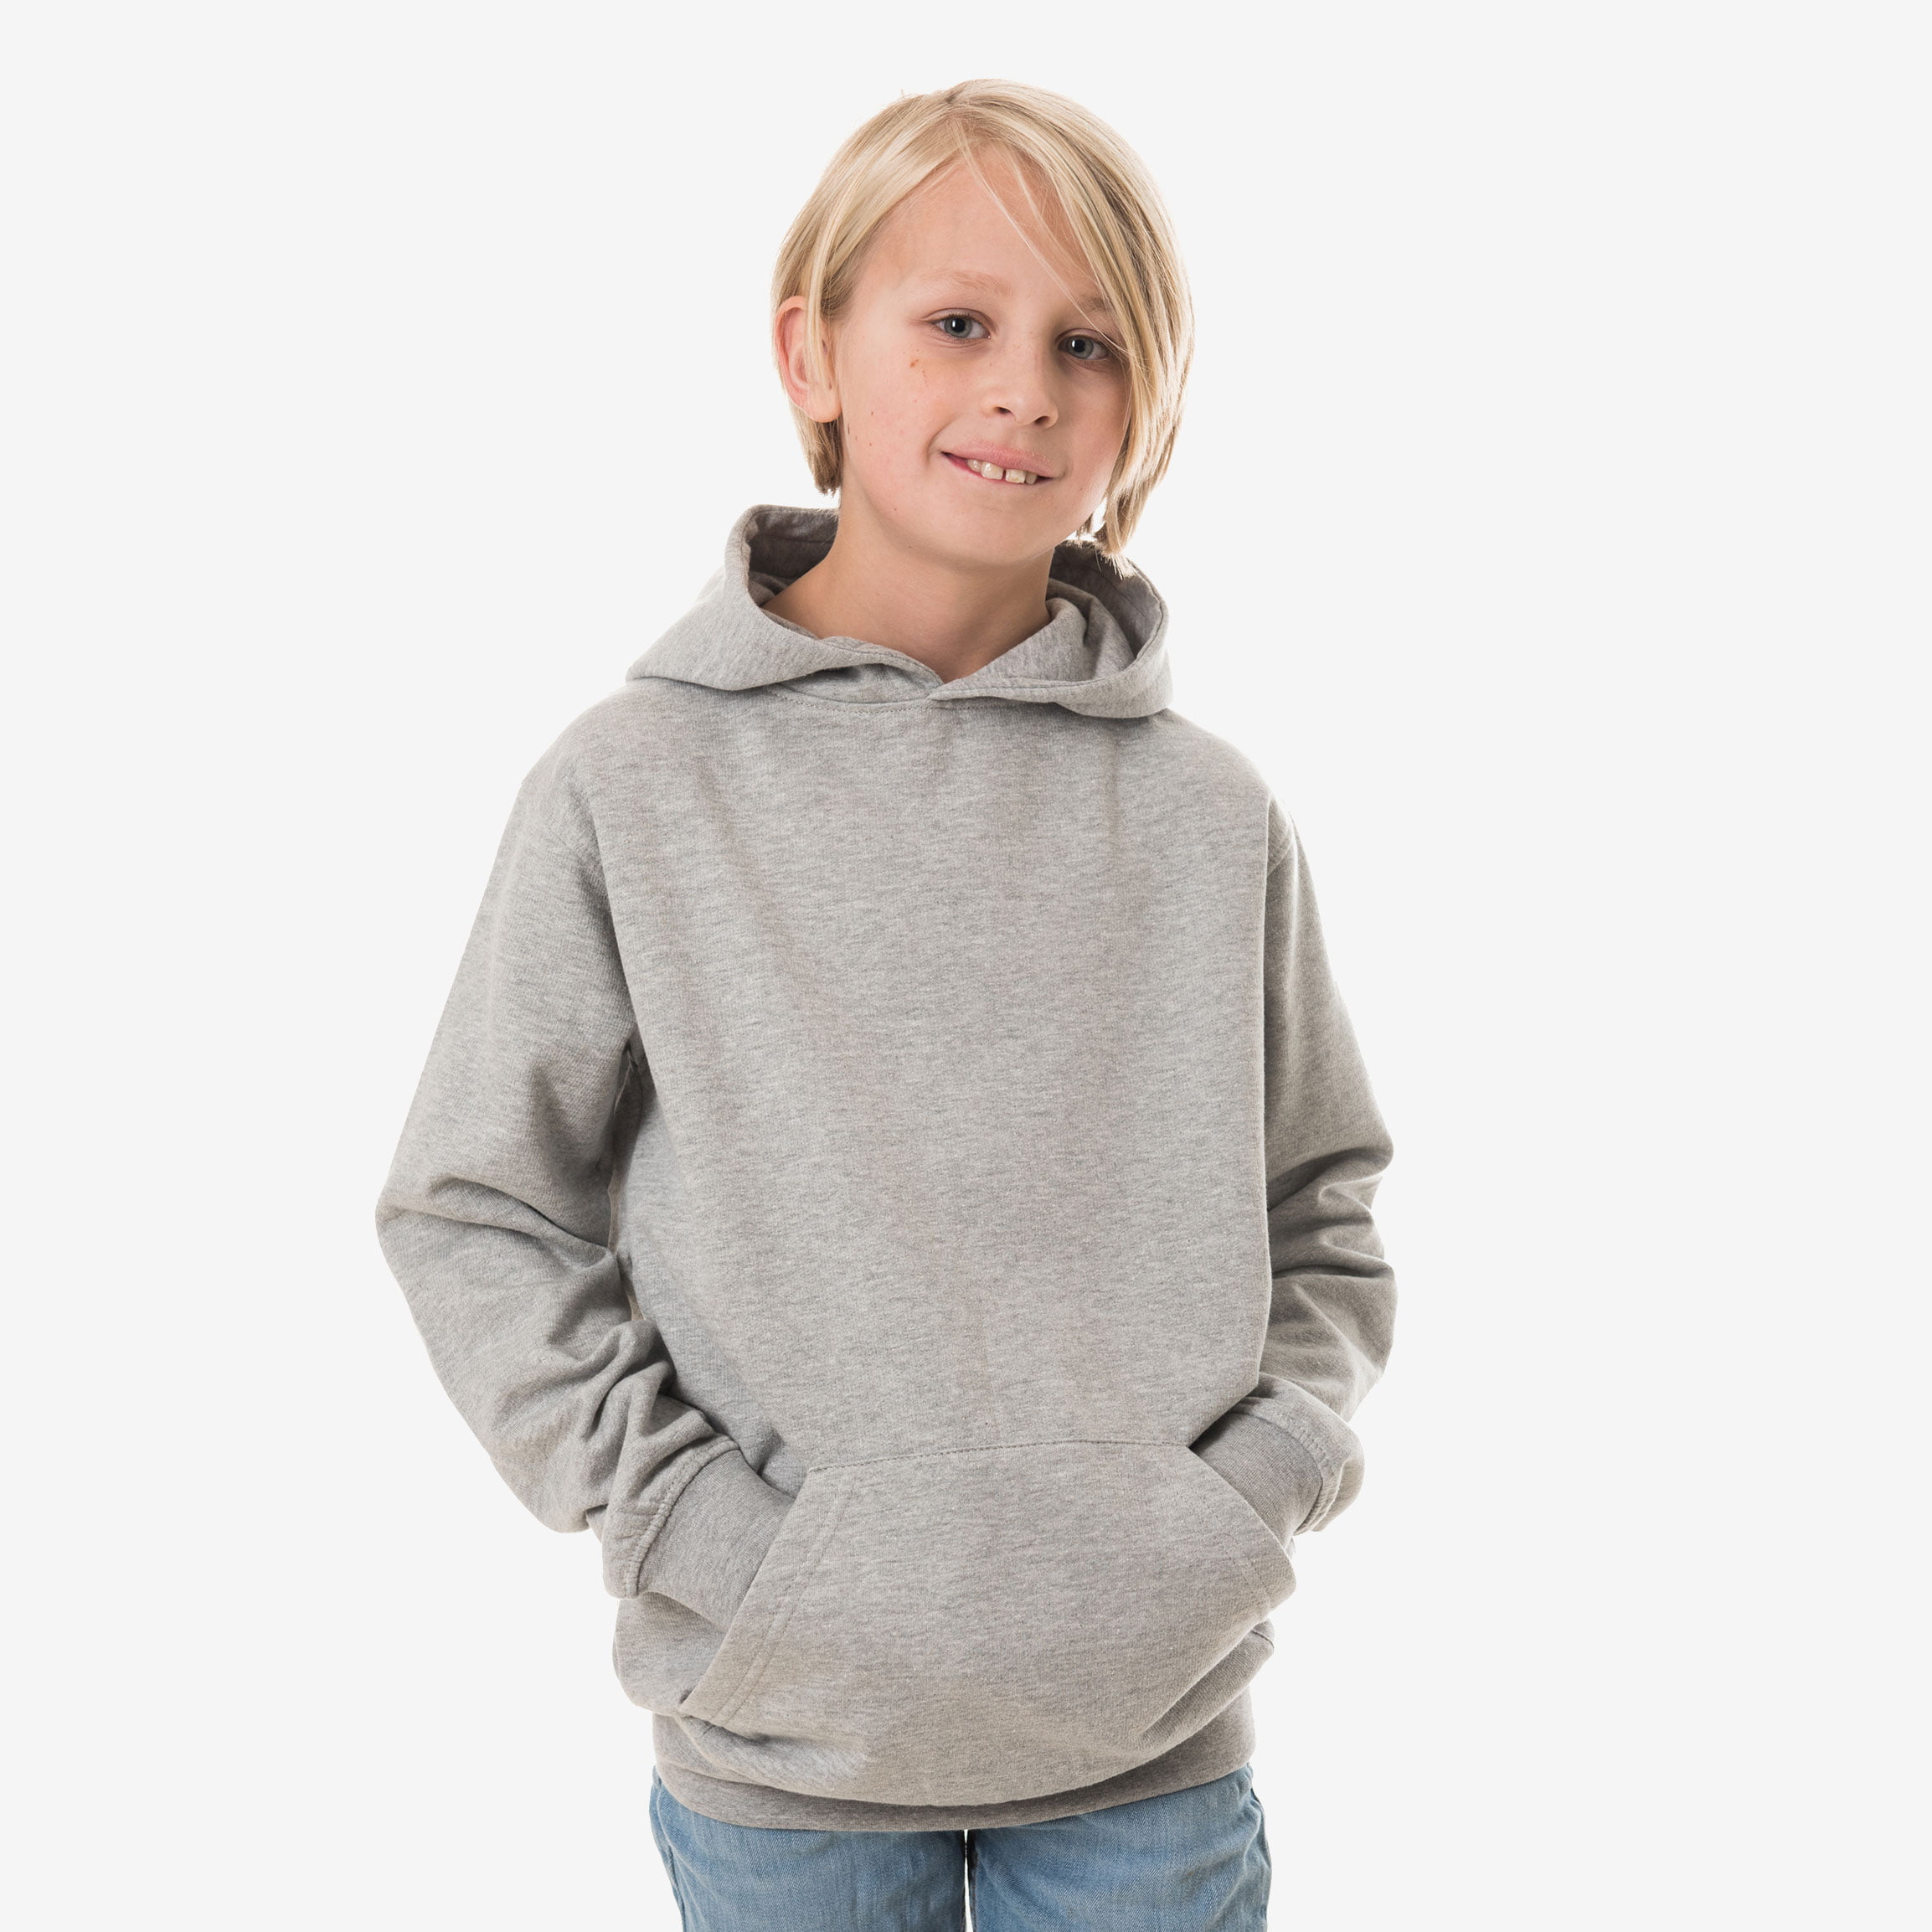 Print on Demand Kids Clothing Pullover Custom Hoodies - Print API, Drop ...